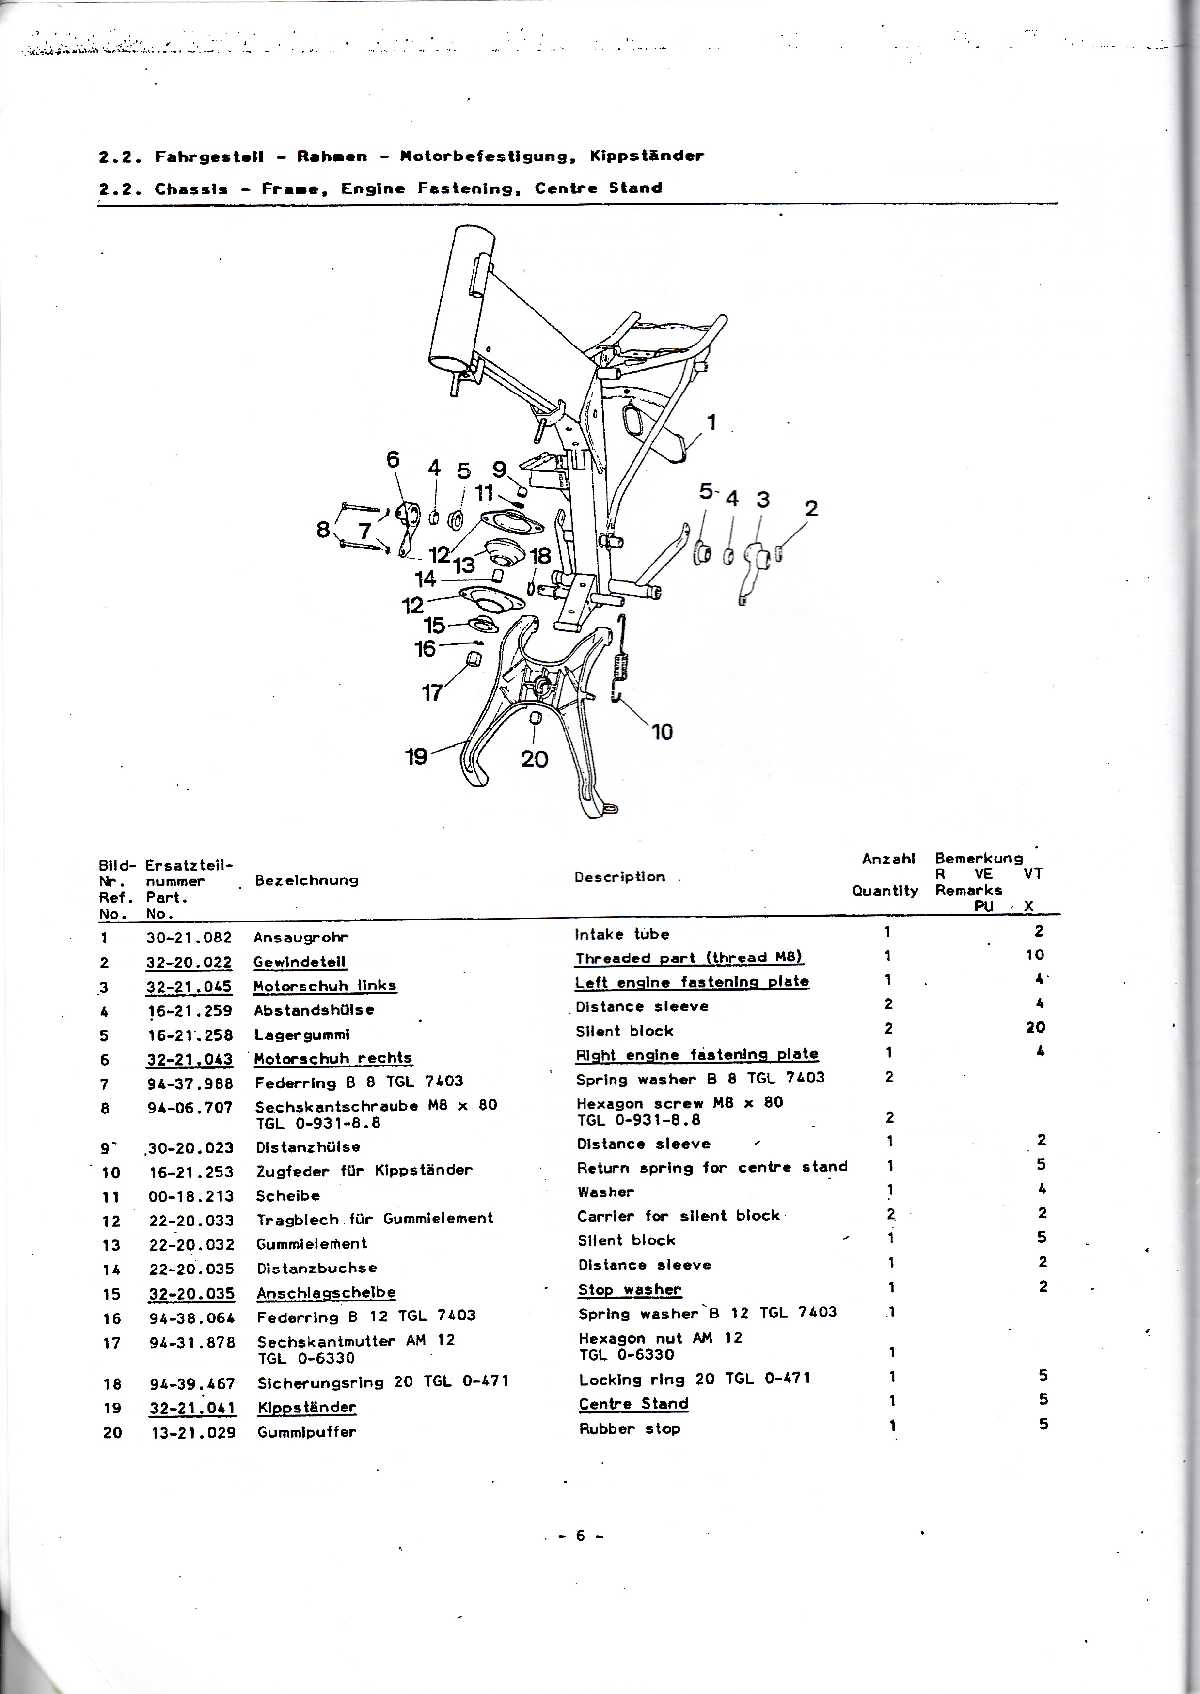 Katalog MZ 150 ETZ, MZ 125 ETZ - 2.2. Fahrgestell - Rahmen - Motorbefestigung, Kippständer